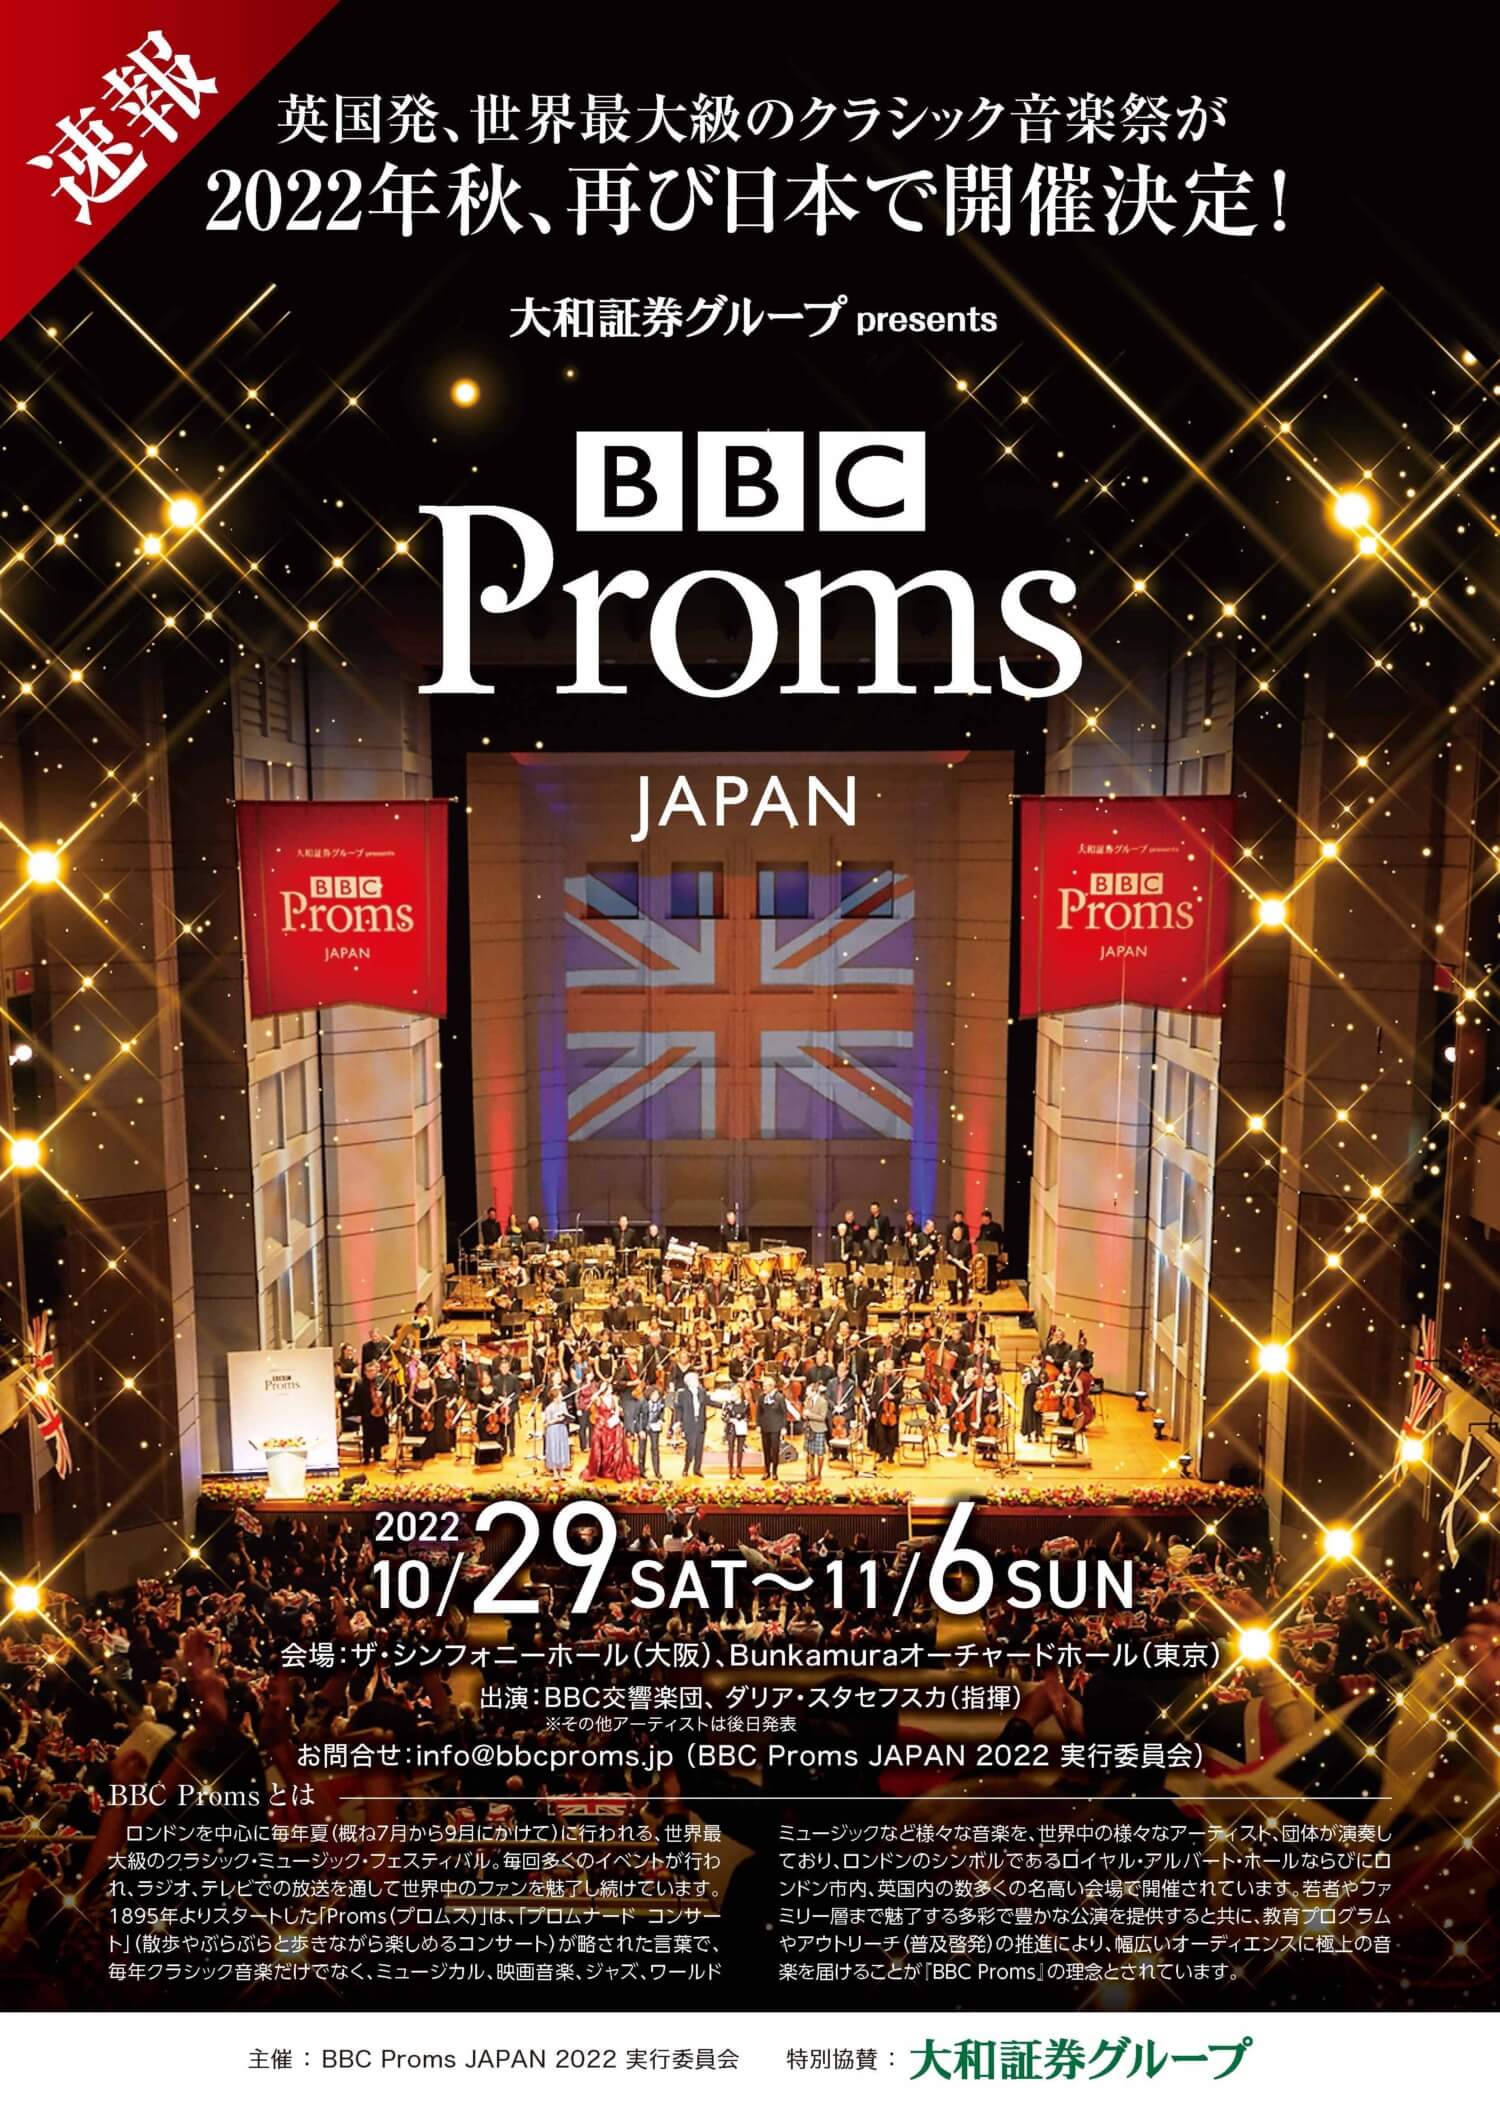 BBC Proms JAPAN 2022